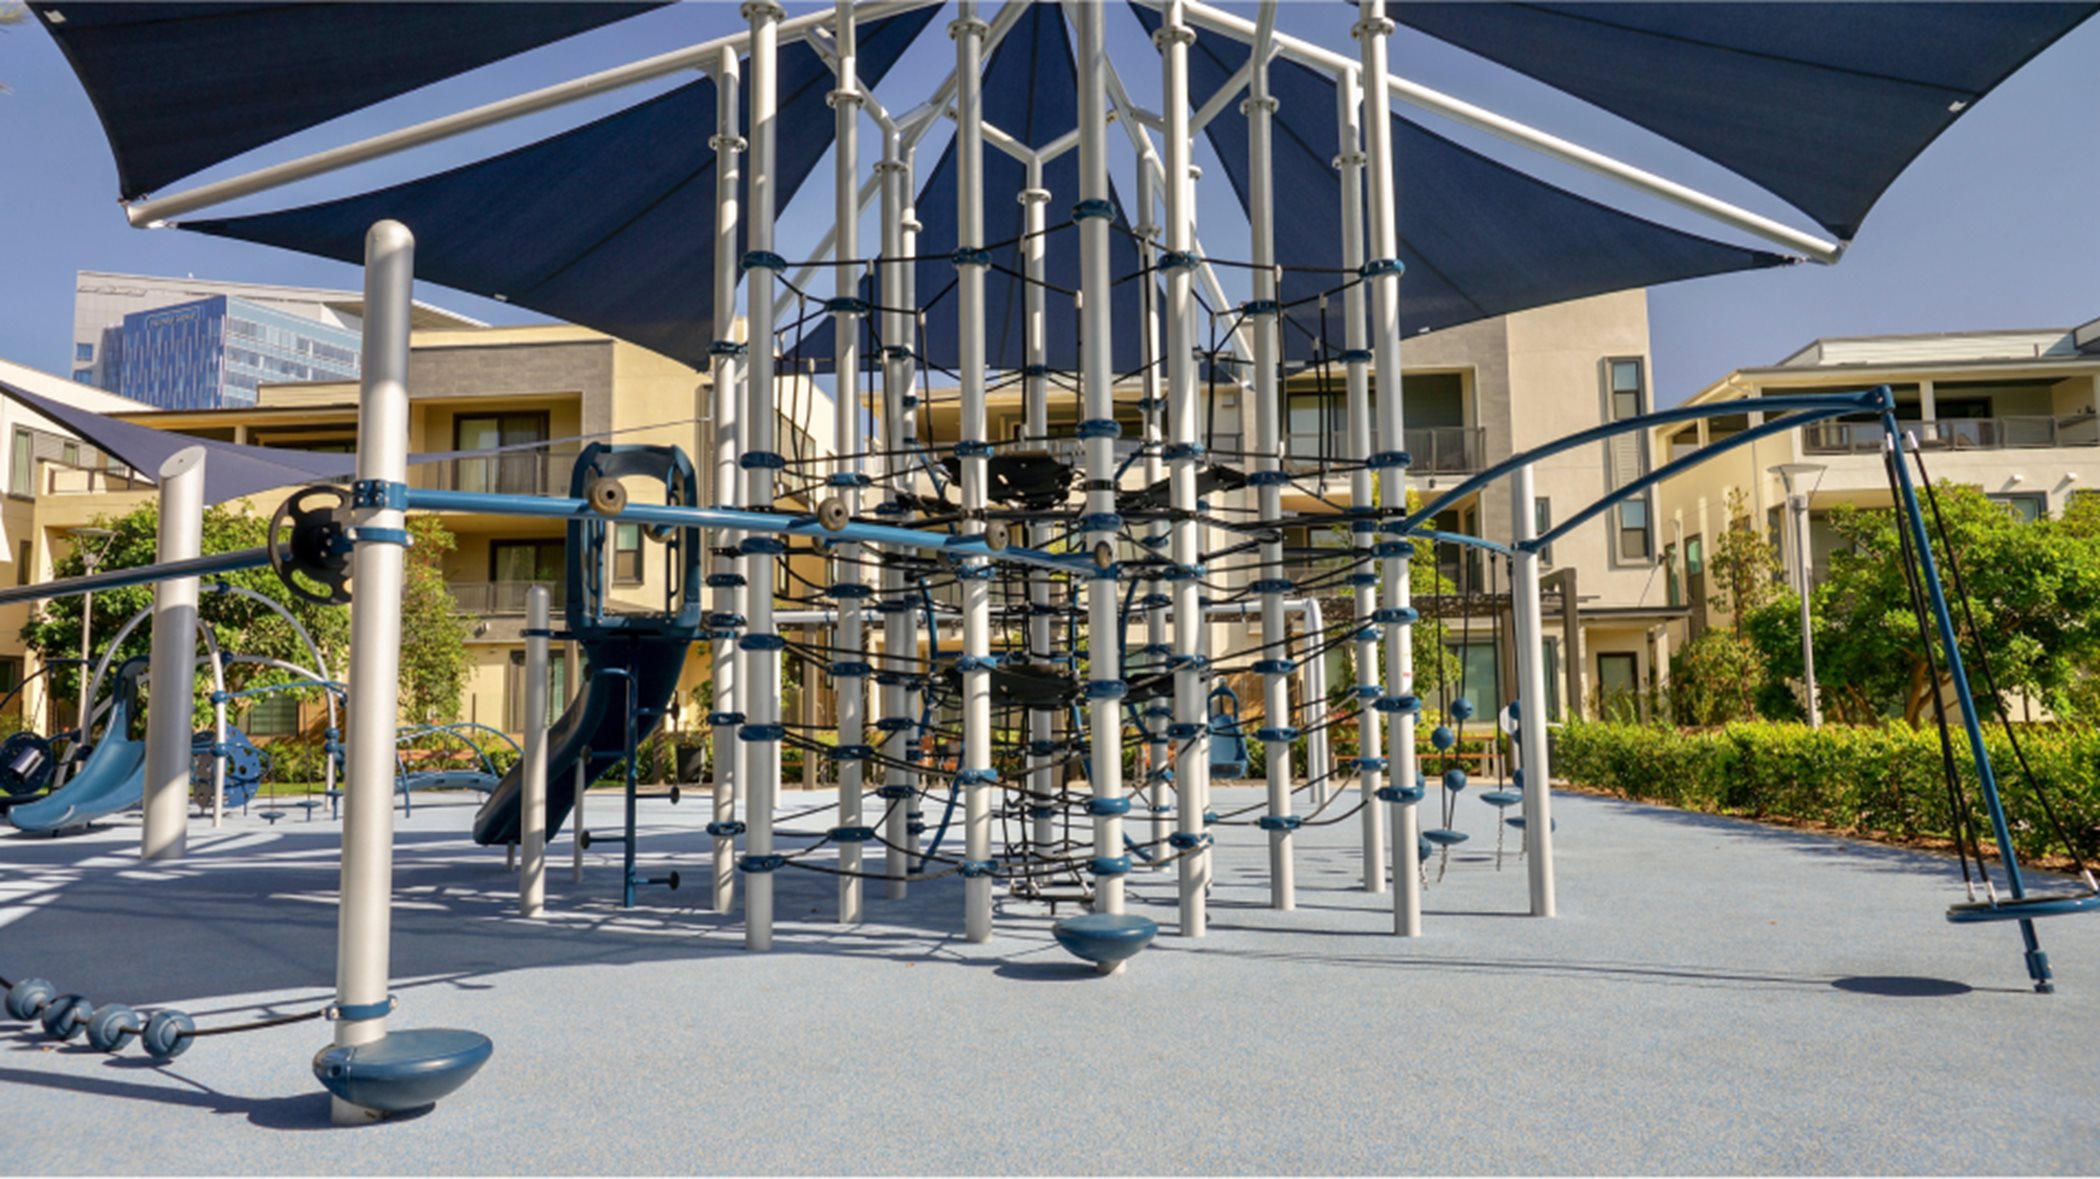 Apparatus at the playground